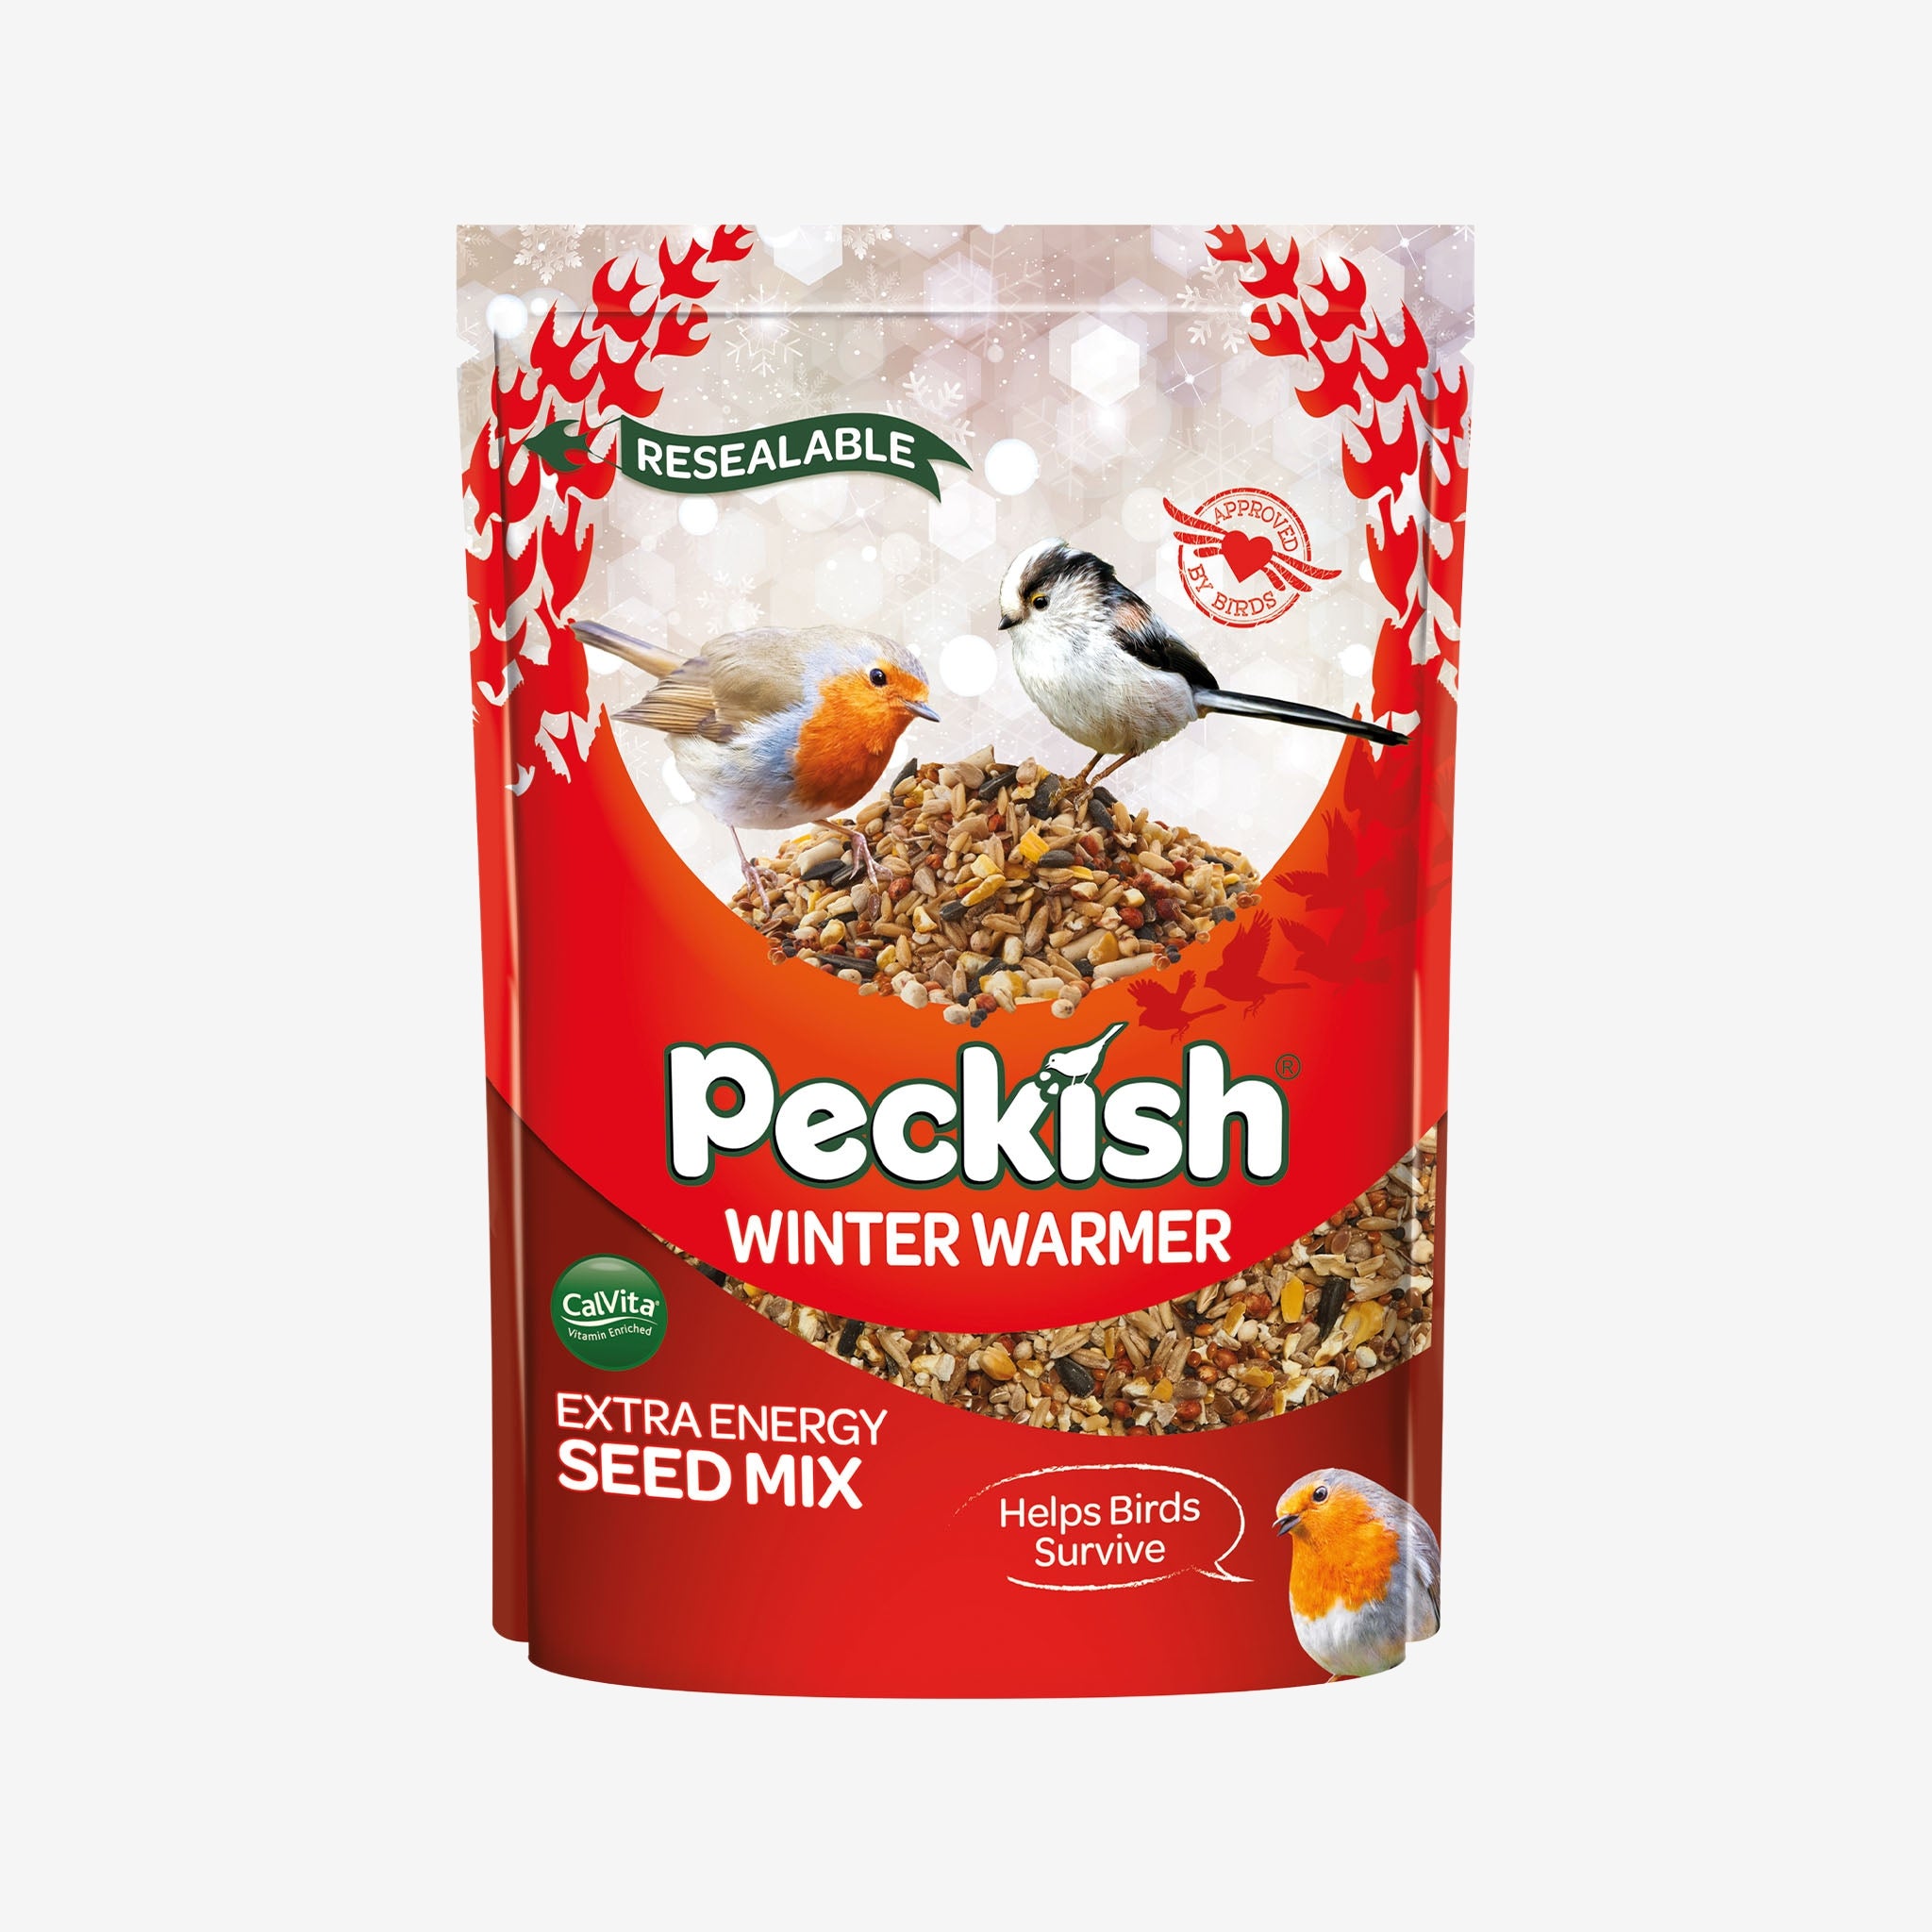 Peckish Winter Warmer Seed Mix